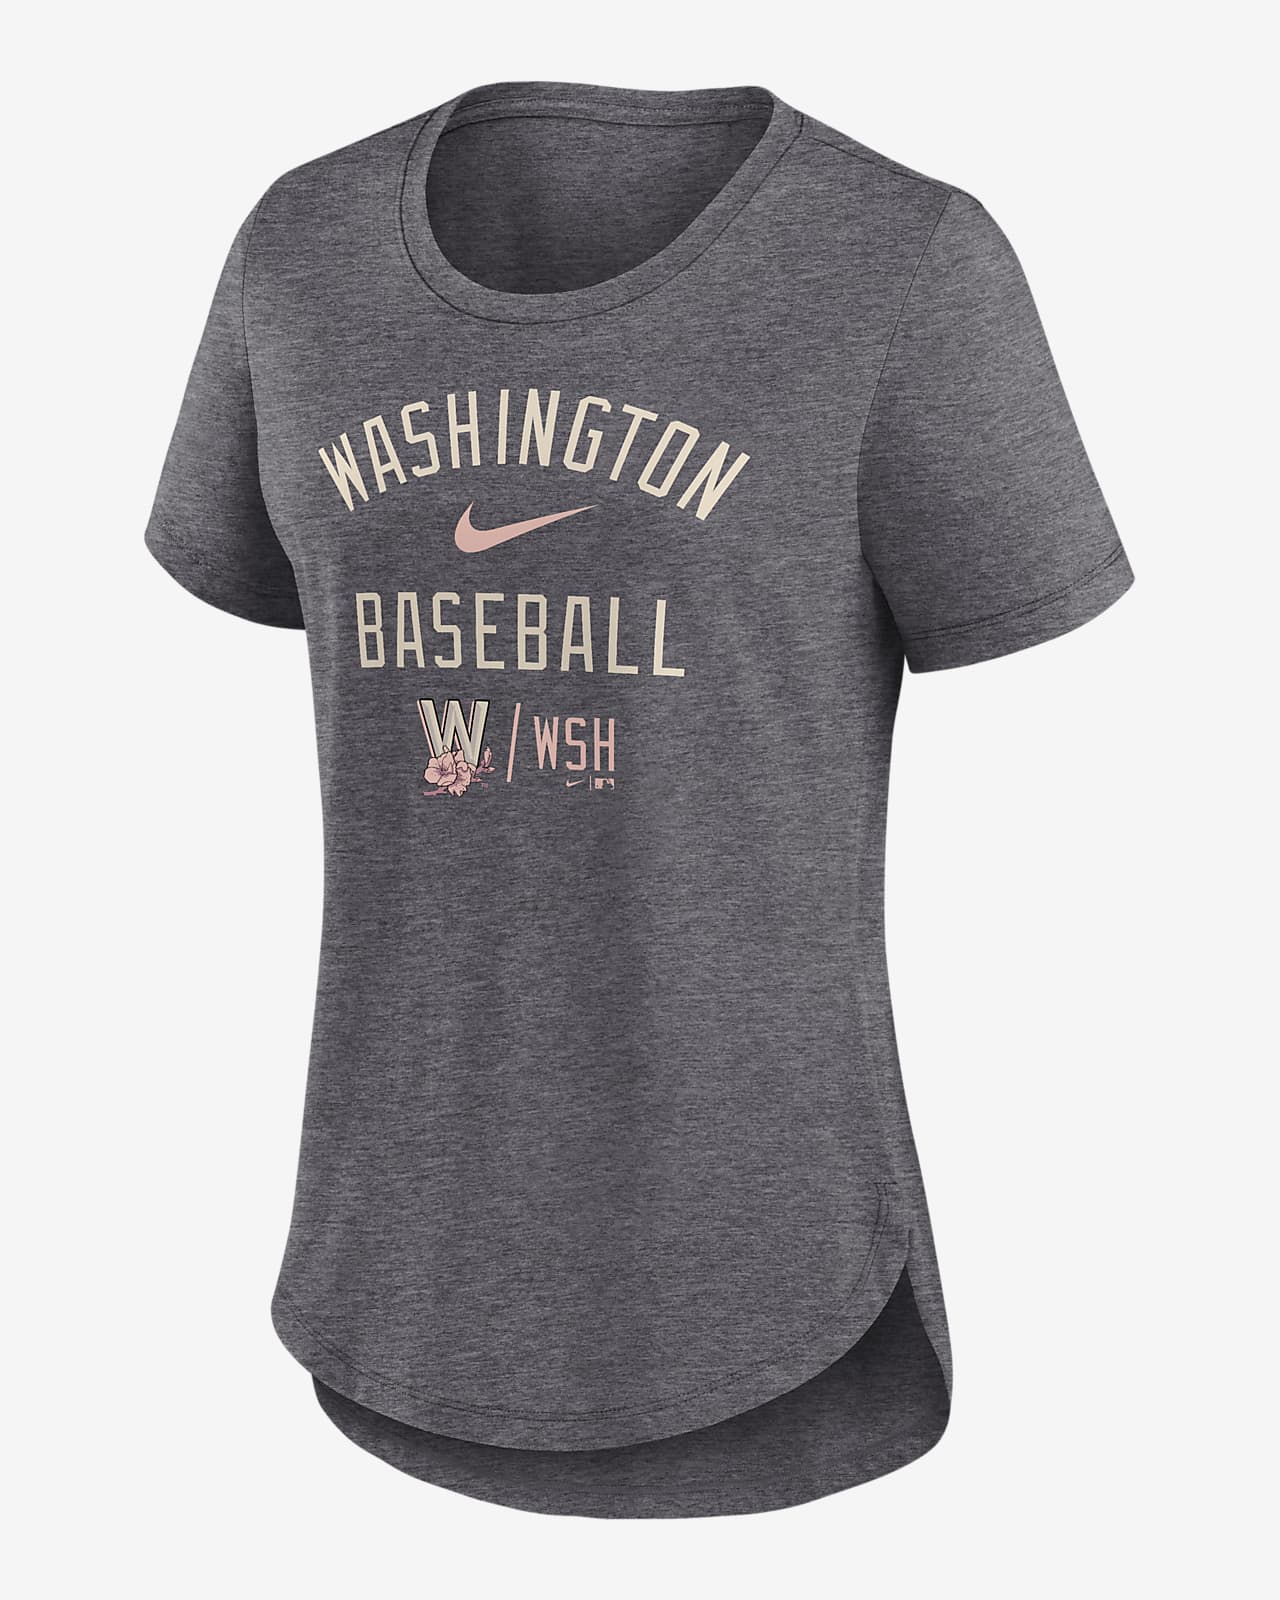 Washington Nationals - Cheap MLB Baseball Jerseys